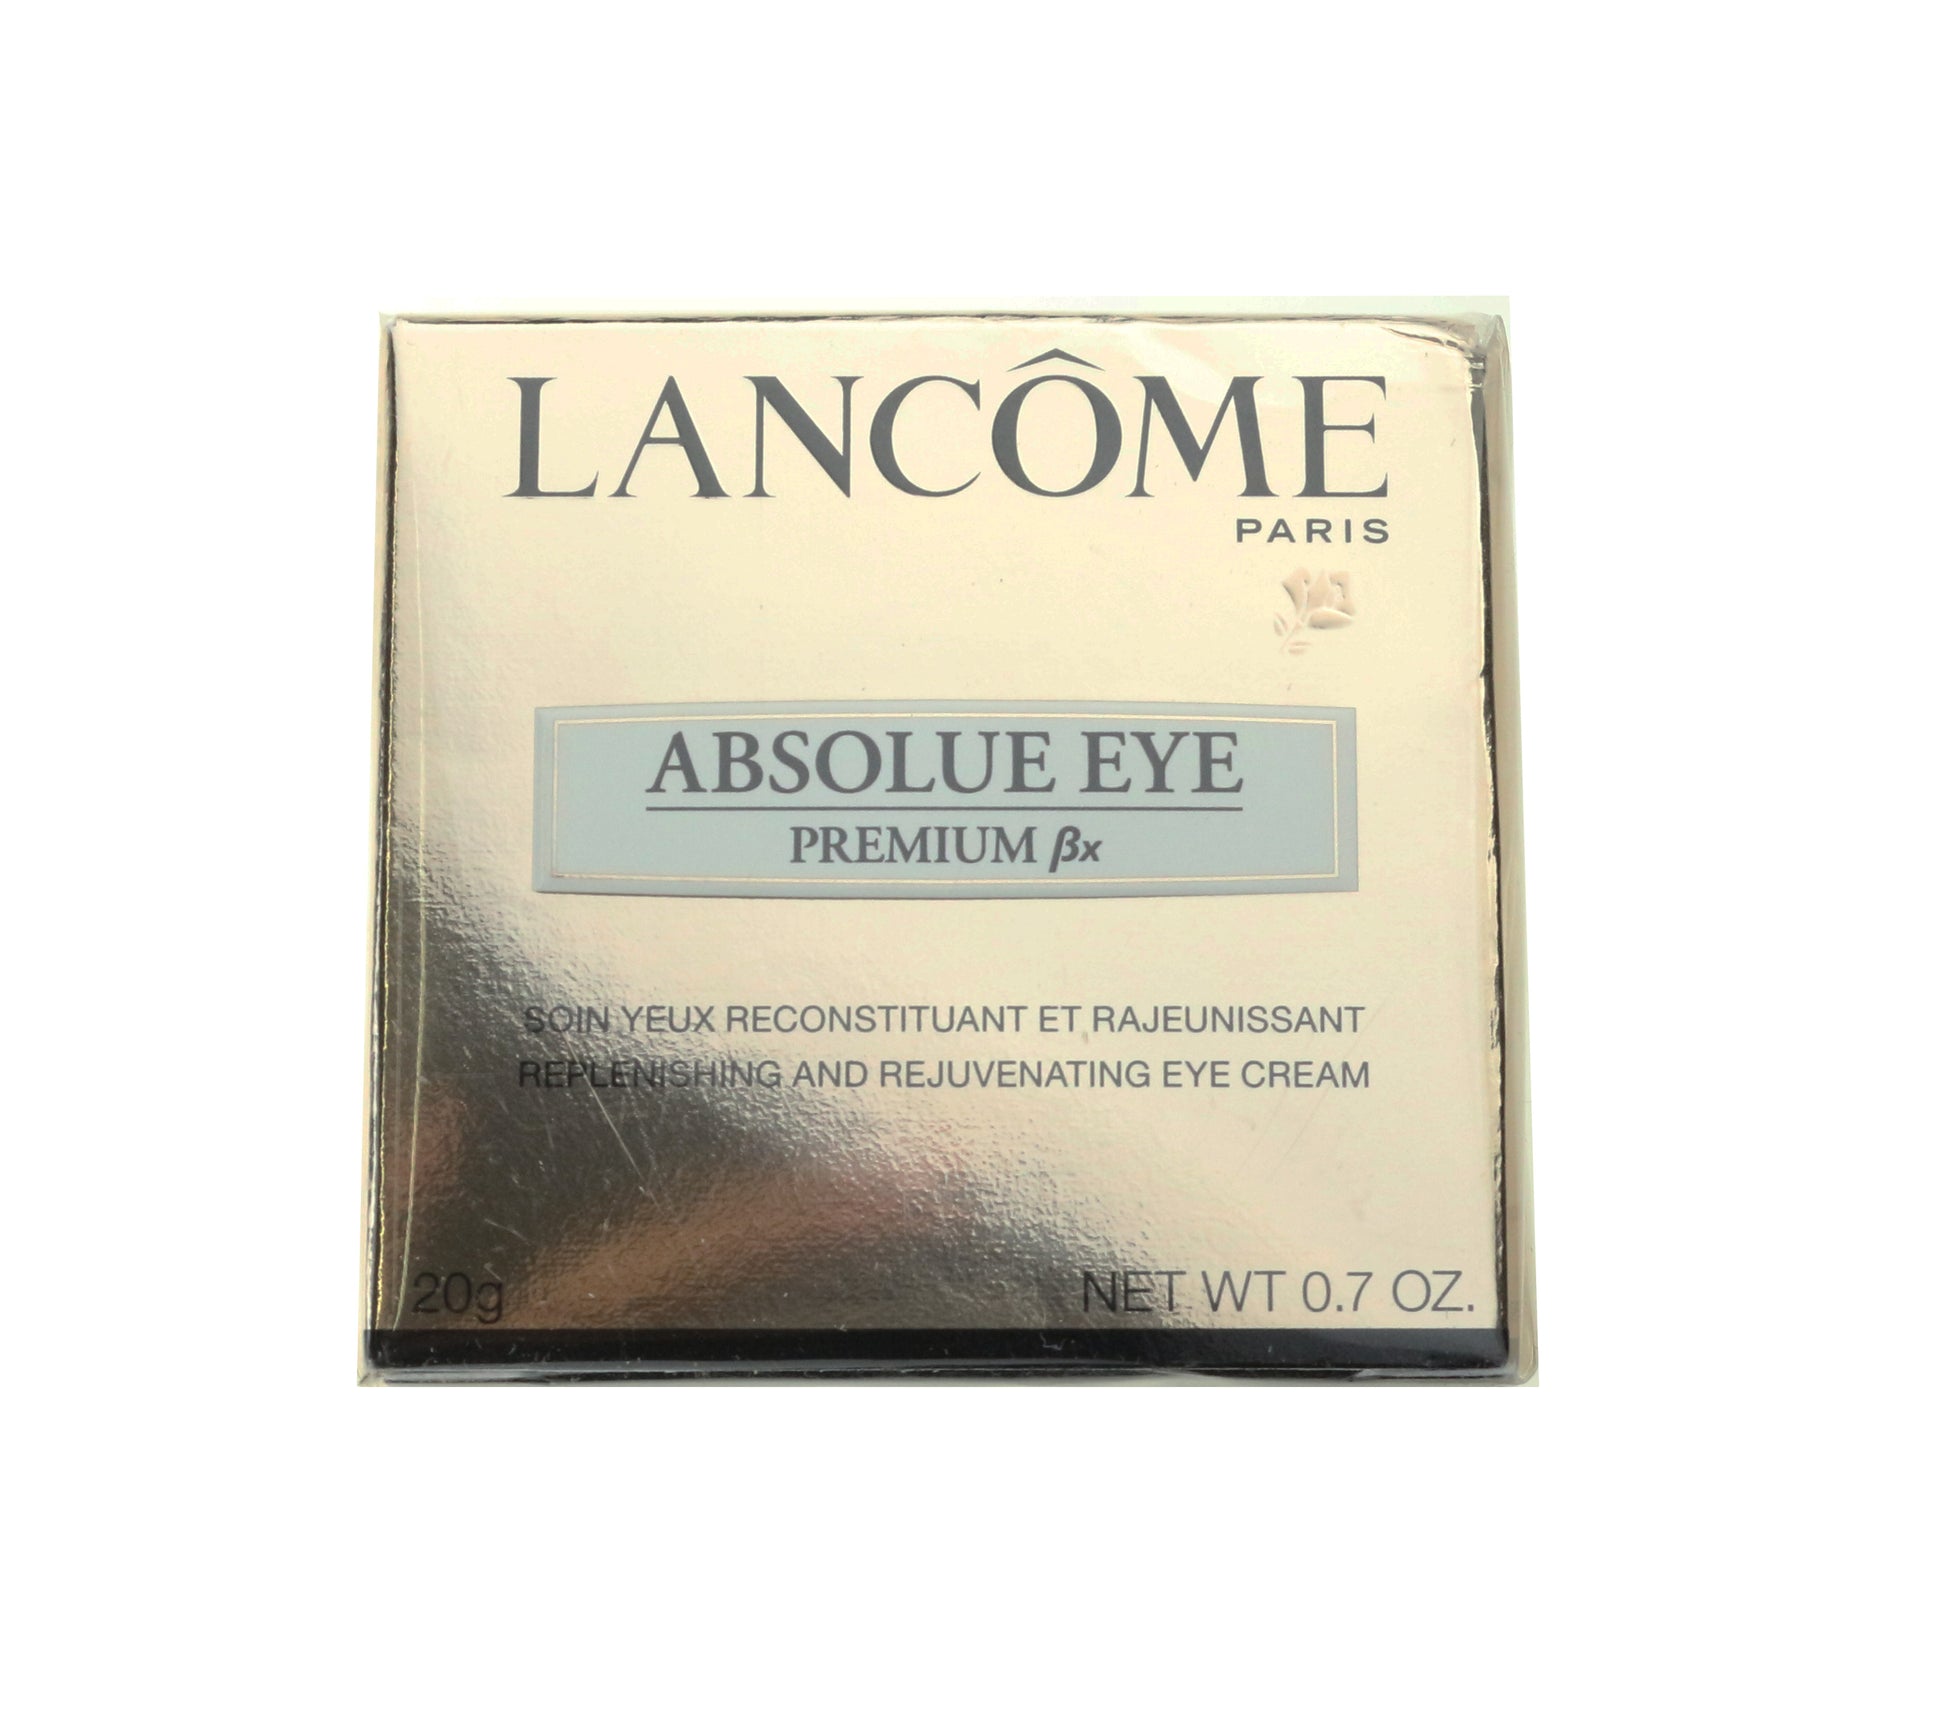 Absolue Eye Premium Bx Eye Cream 20 g